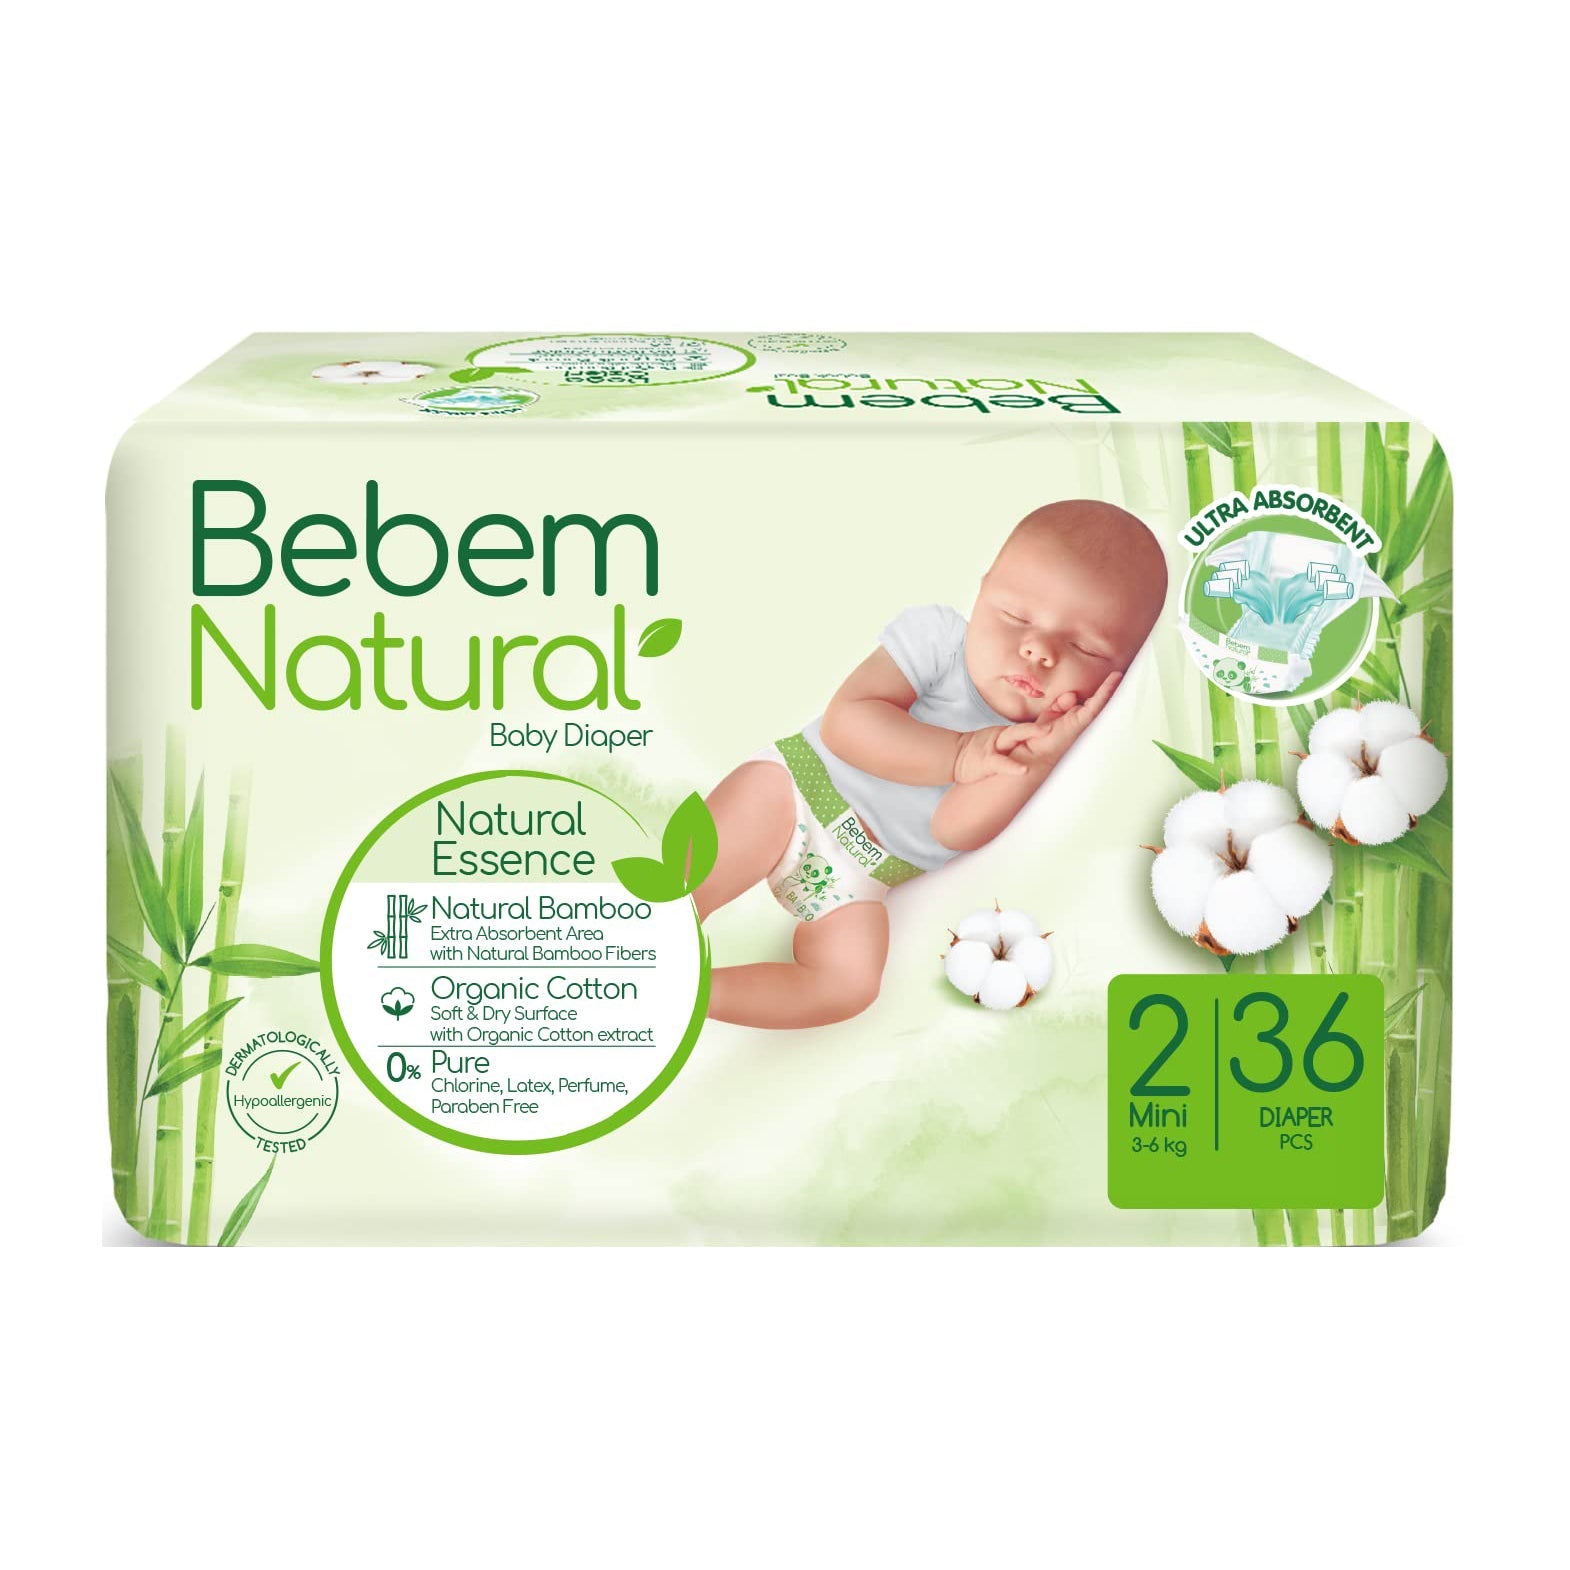 Bebem Natural Baby Diaper Size 2 Mini (3-6kg) - 36 Diaper - Bloom Pharmacy